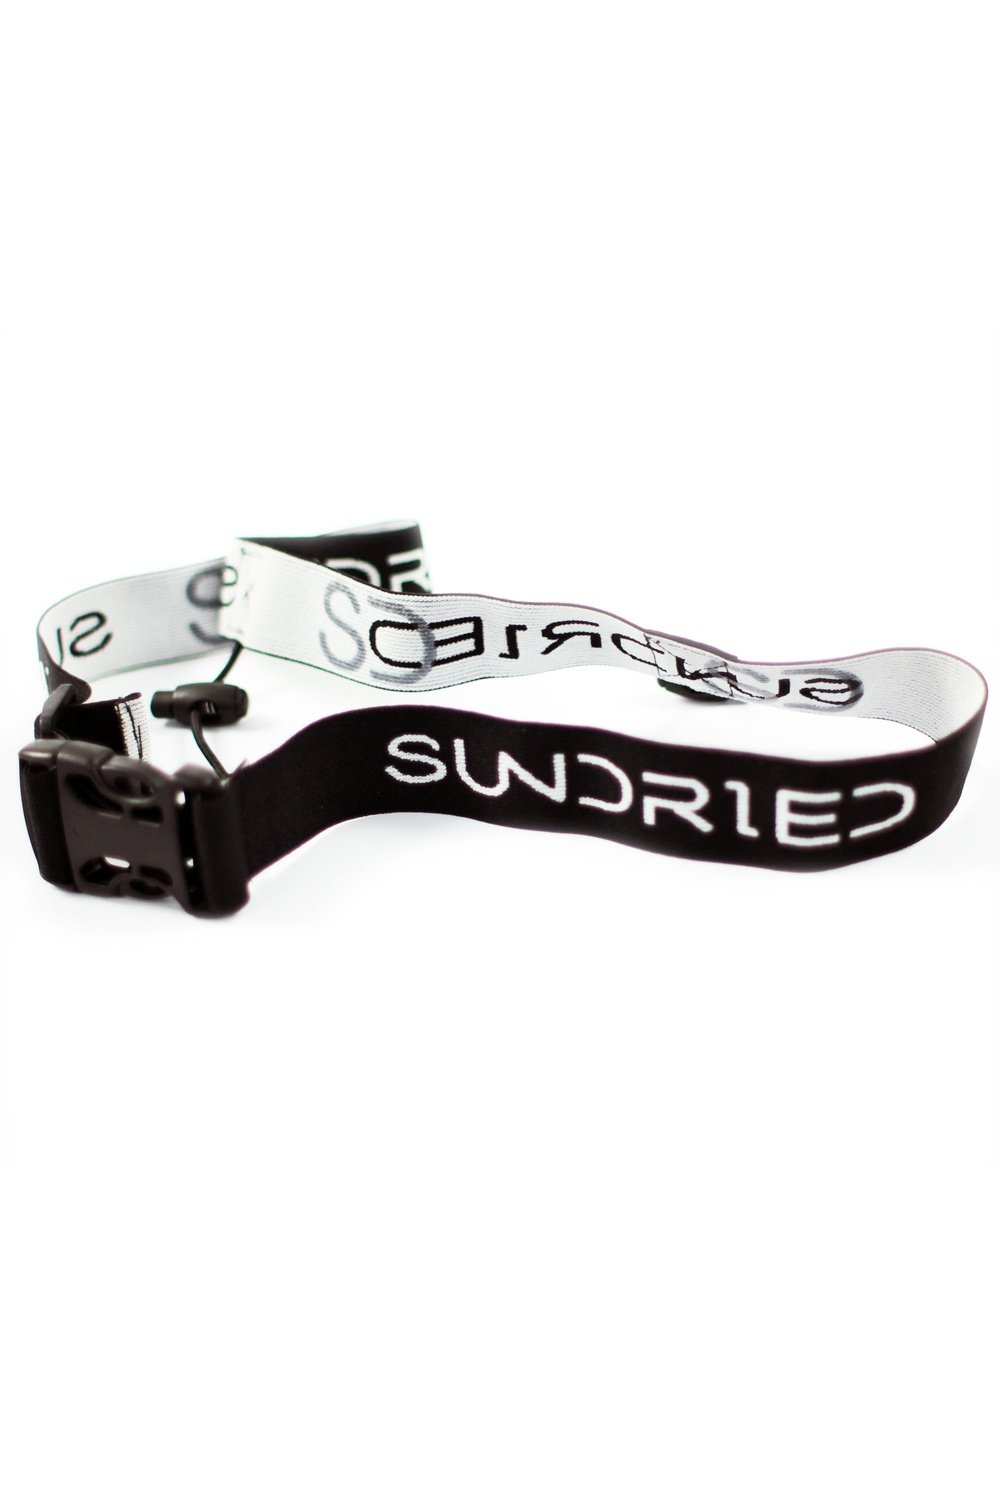 Sundried Race Number Belt. Triathlon Belt Accessories Default SDRACEBELT Activewear